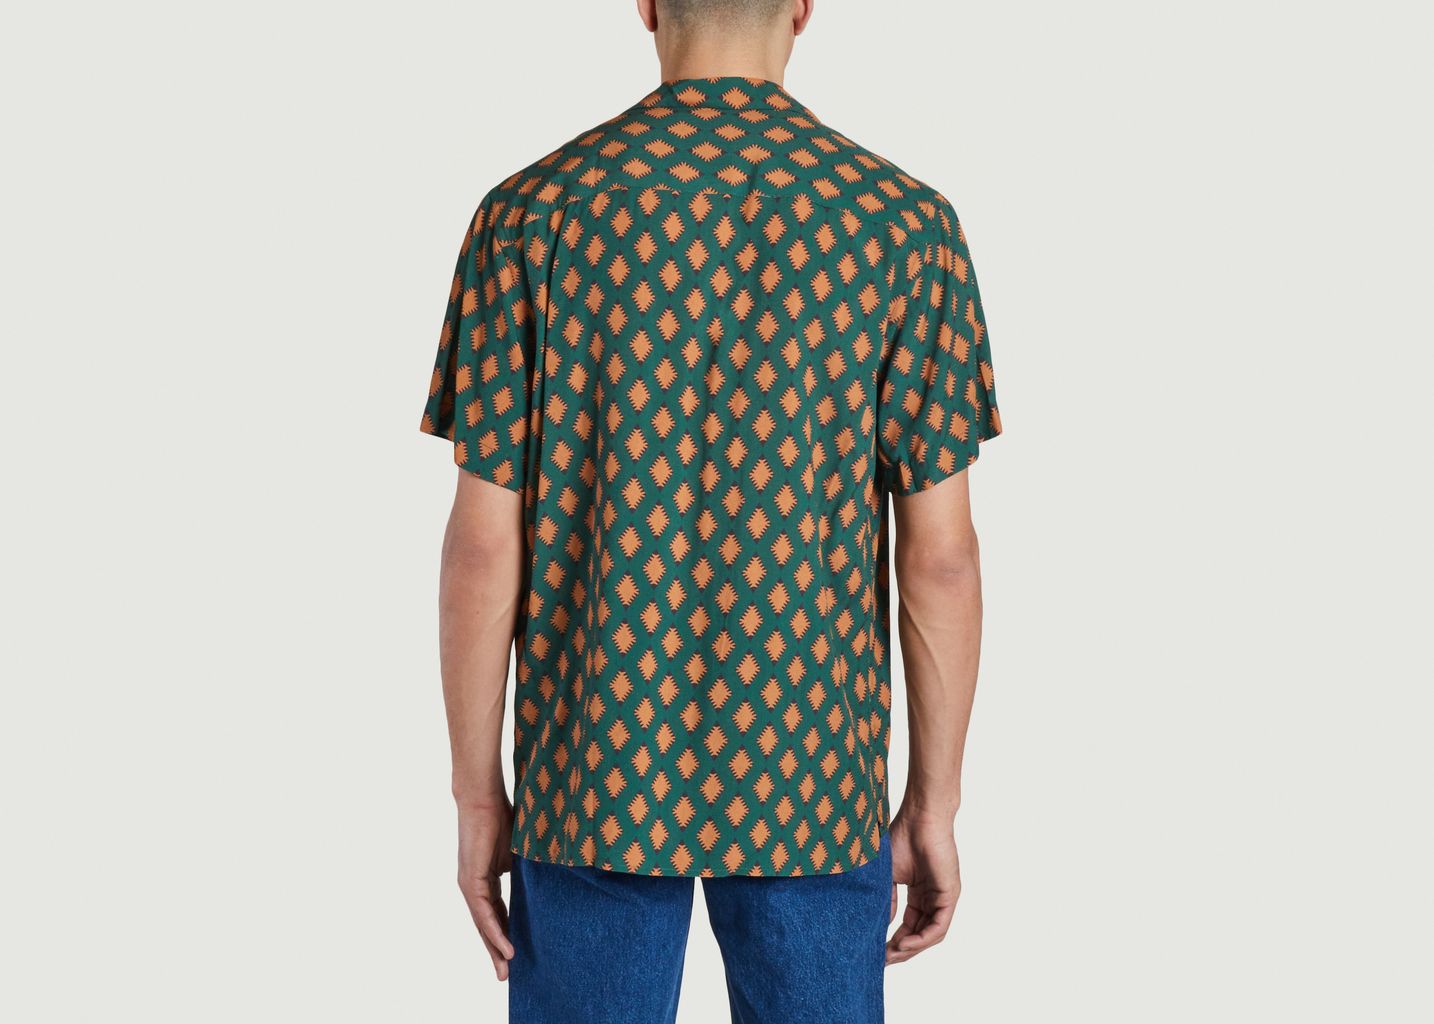 Smokin Rustic printed shirt - OAS company